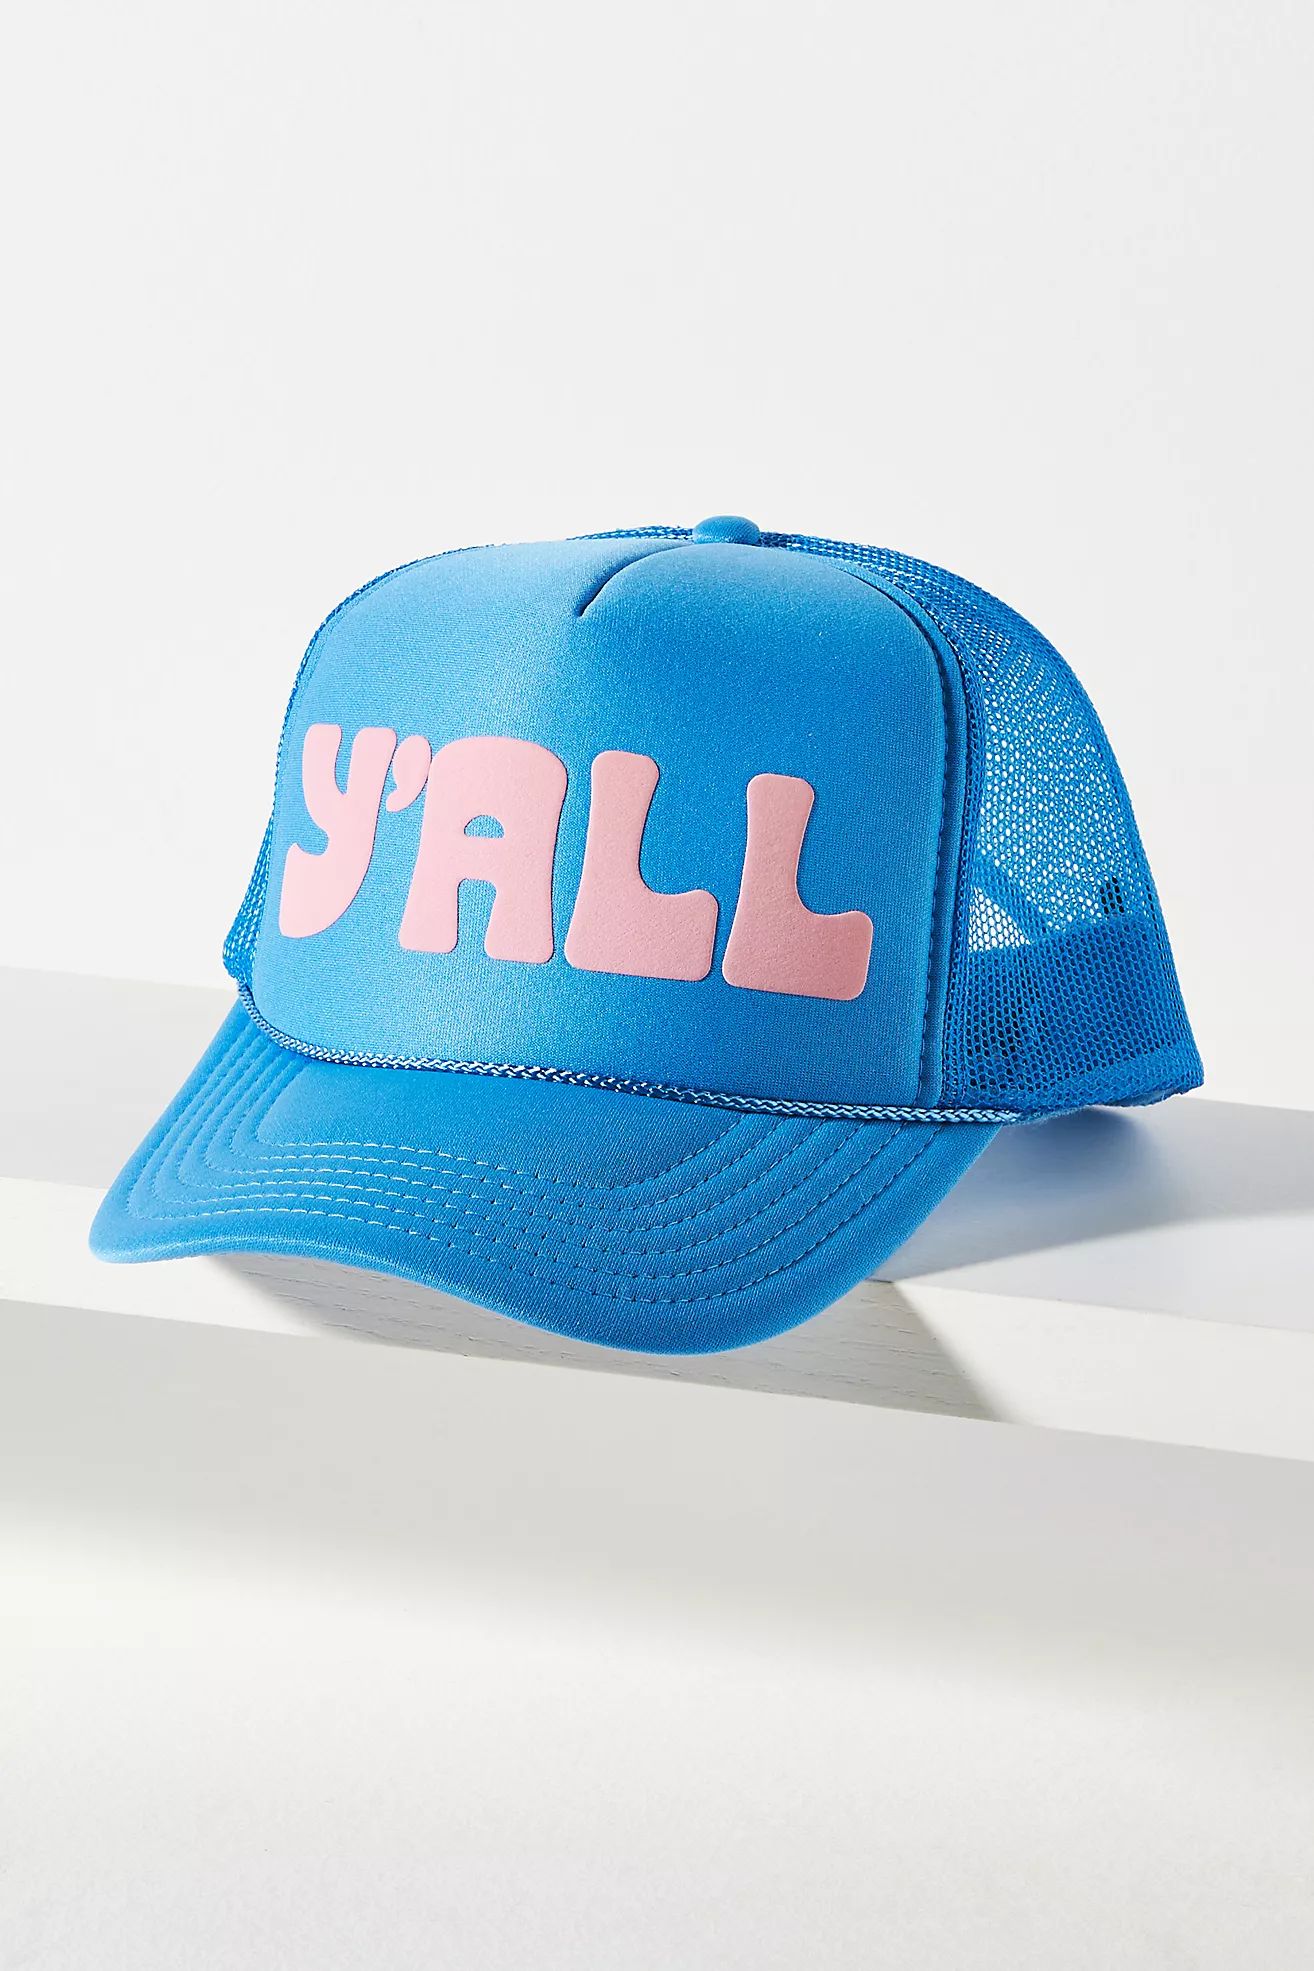 Ascot + Hart Y'all Trucker Hat | Anthropologie (US)